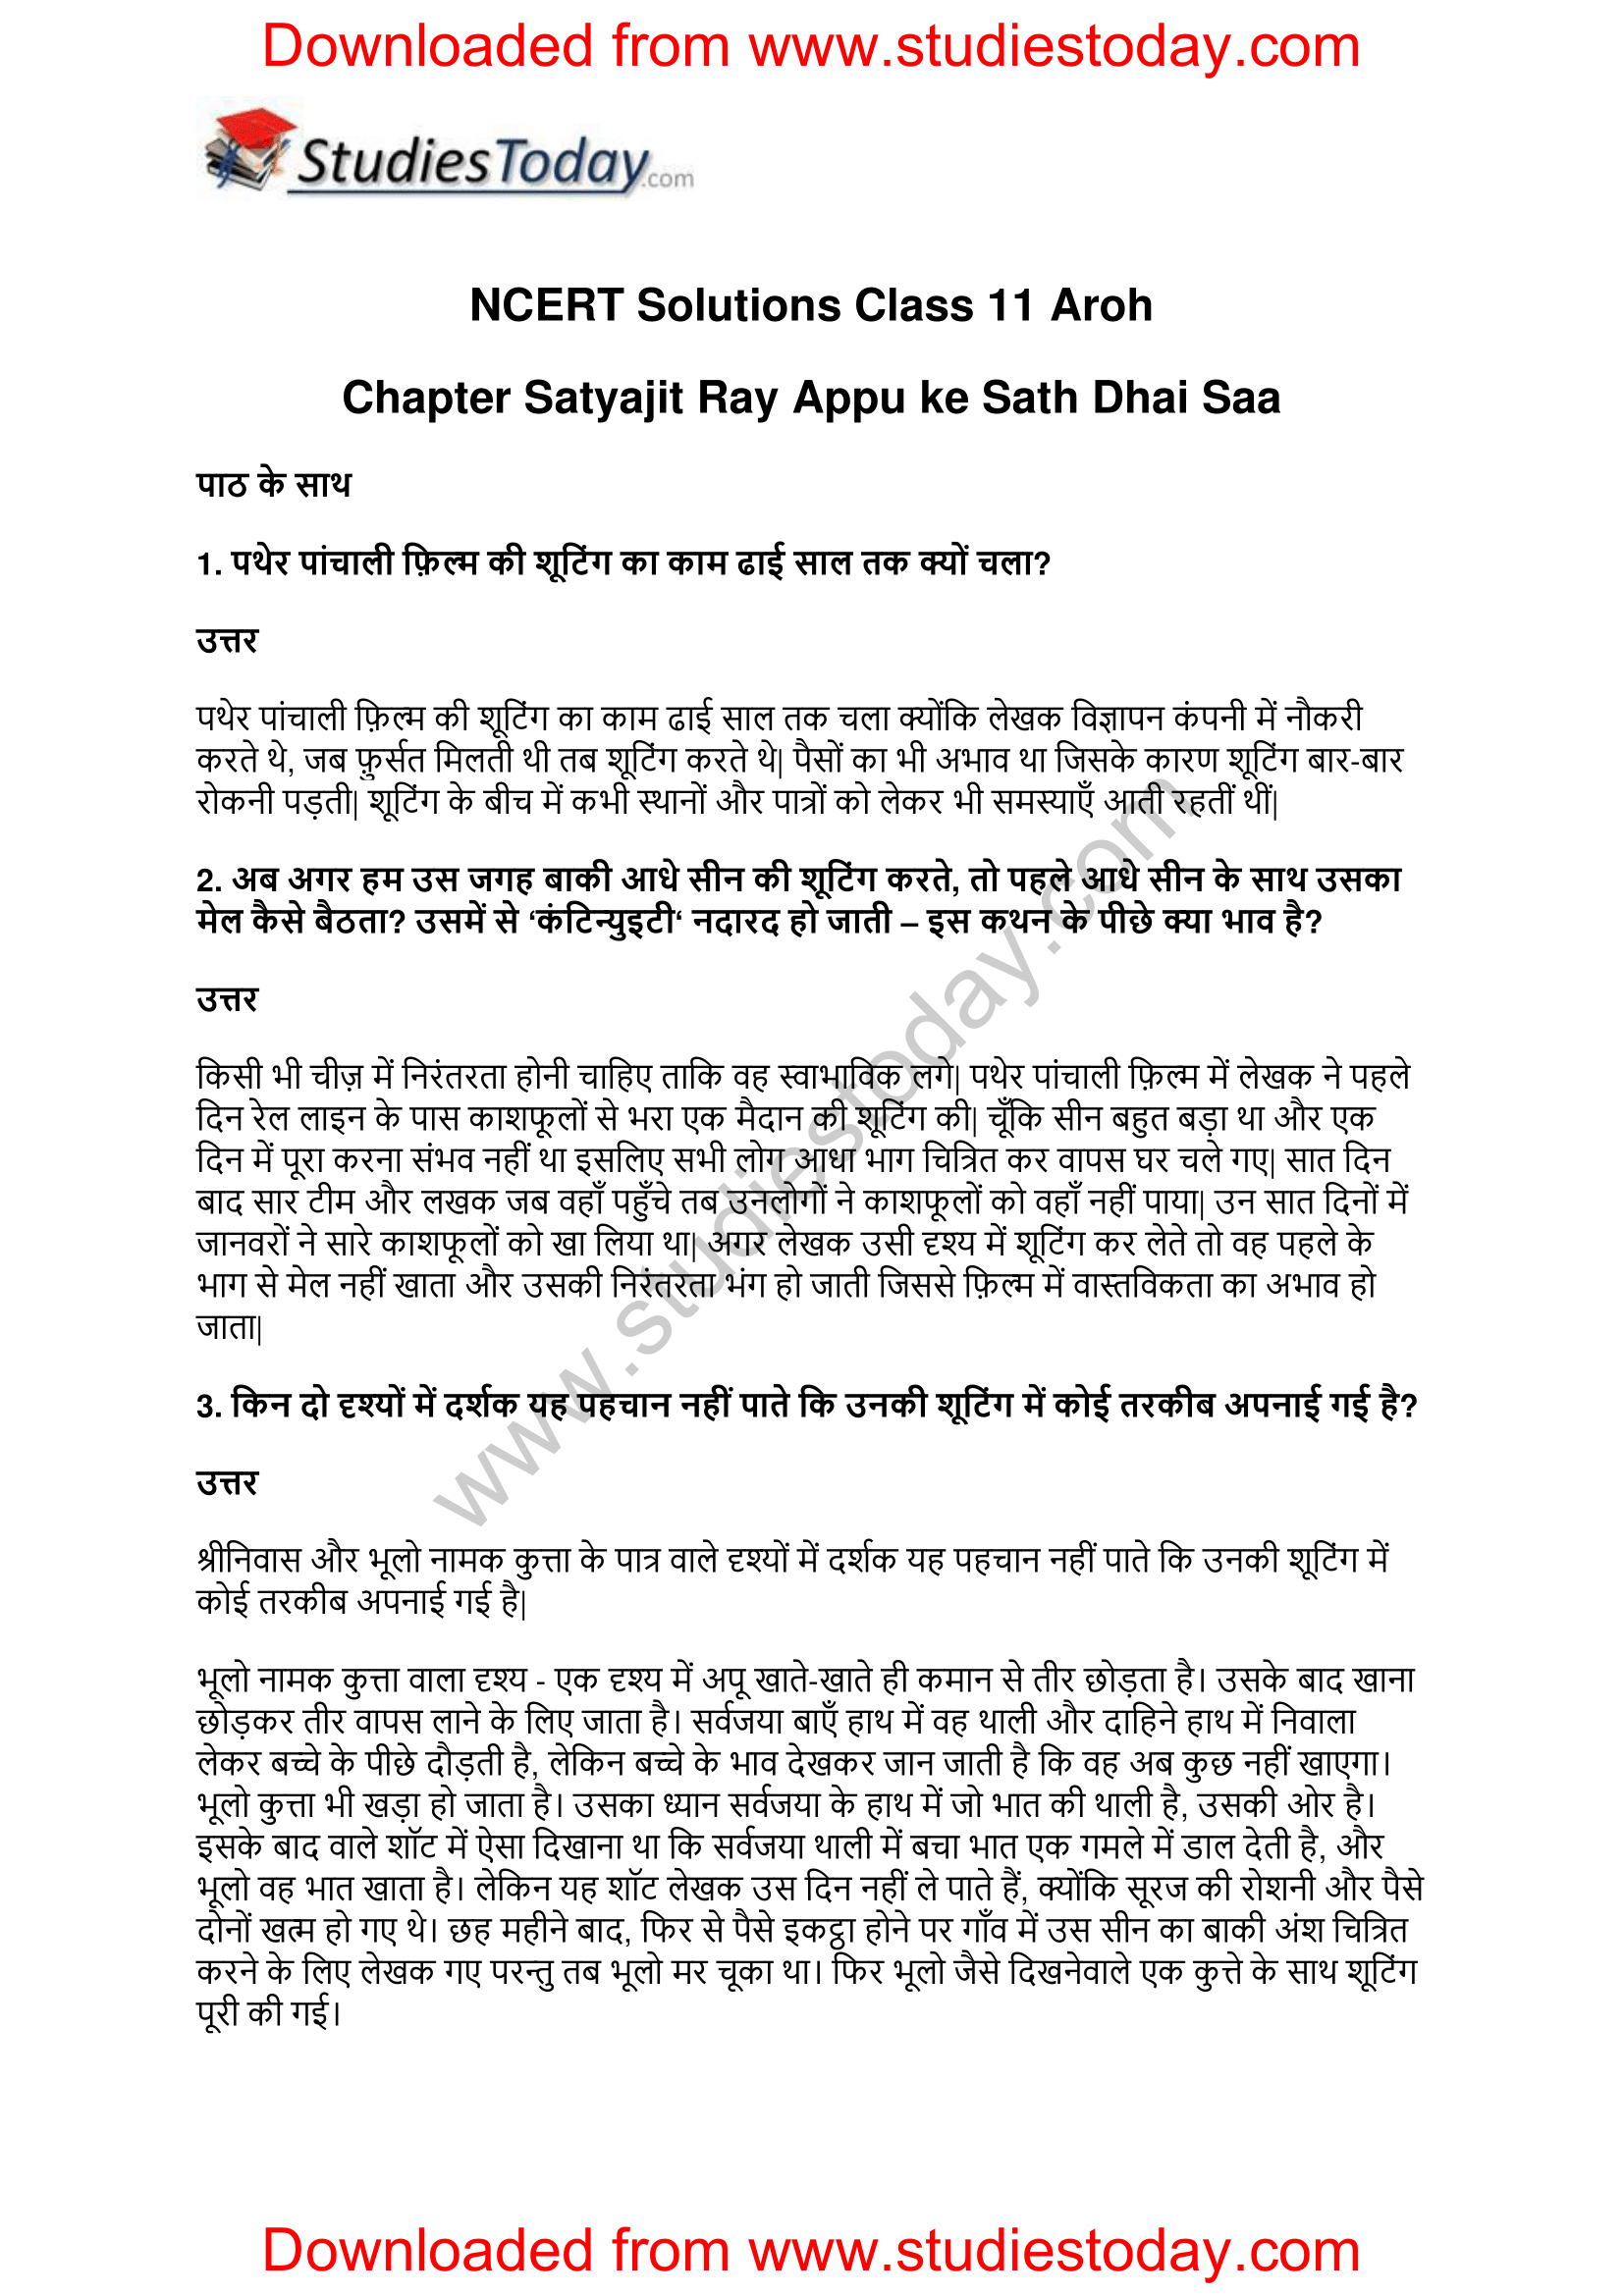 NCERT-Solutions-Class-11-Hindi-Aroh-Satyajit-Ray-1